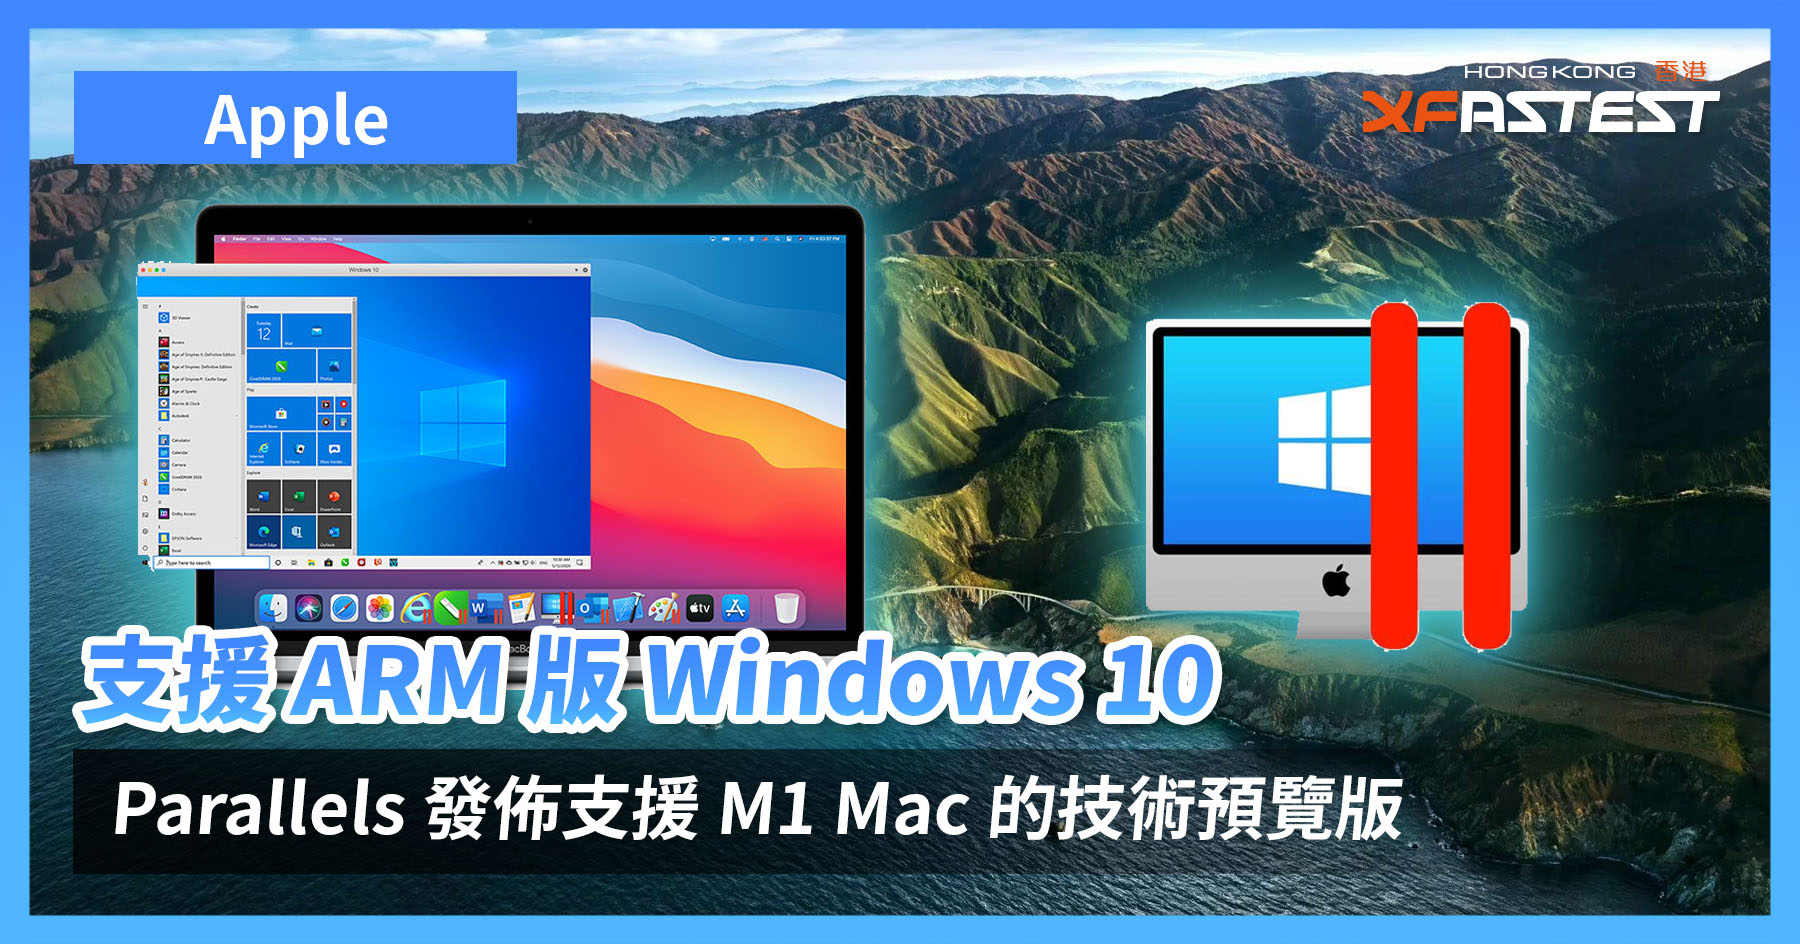 m1 mac parallels windows 10